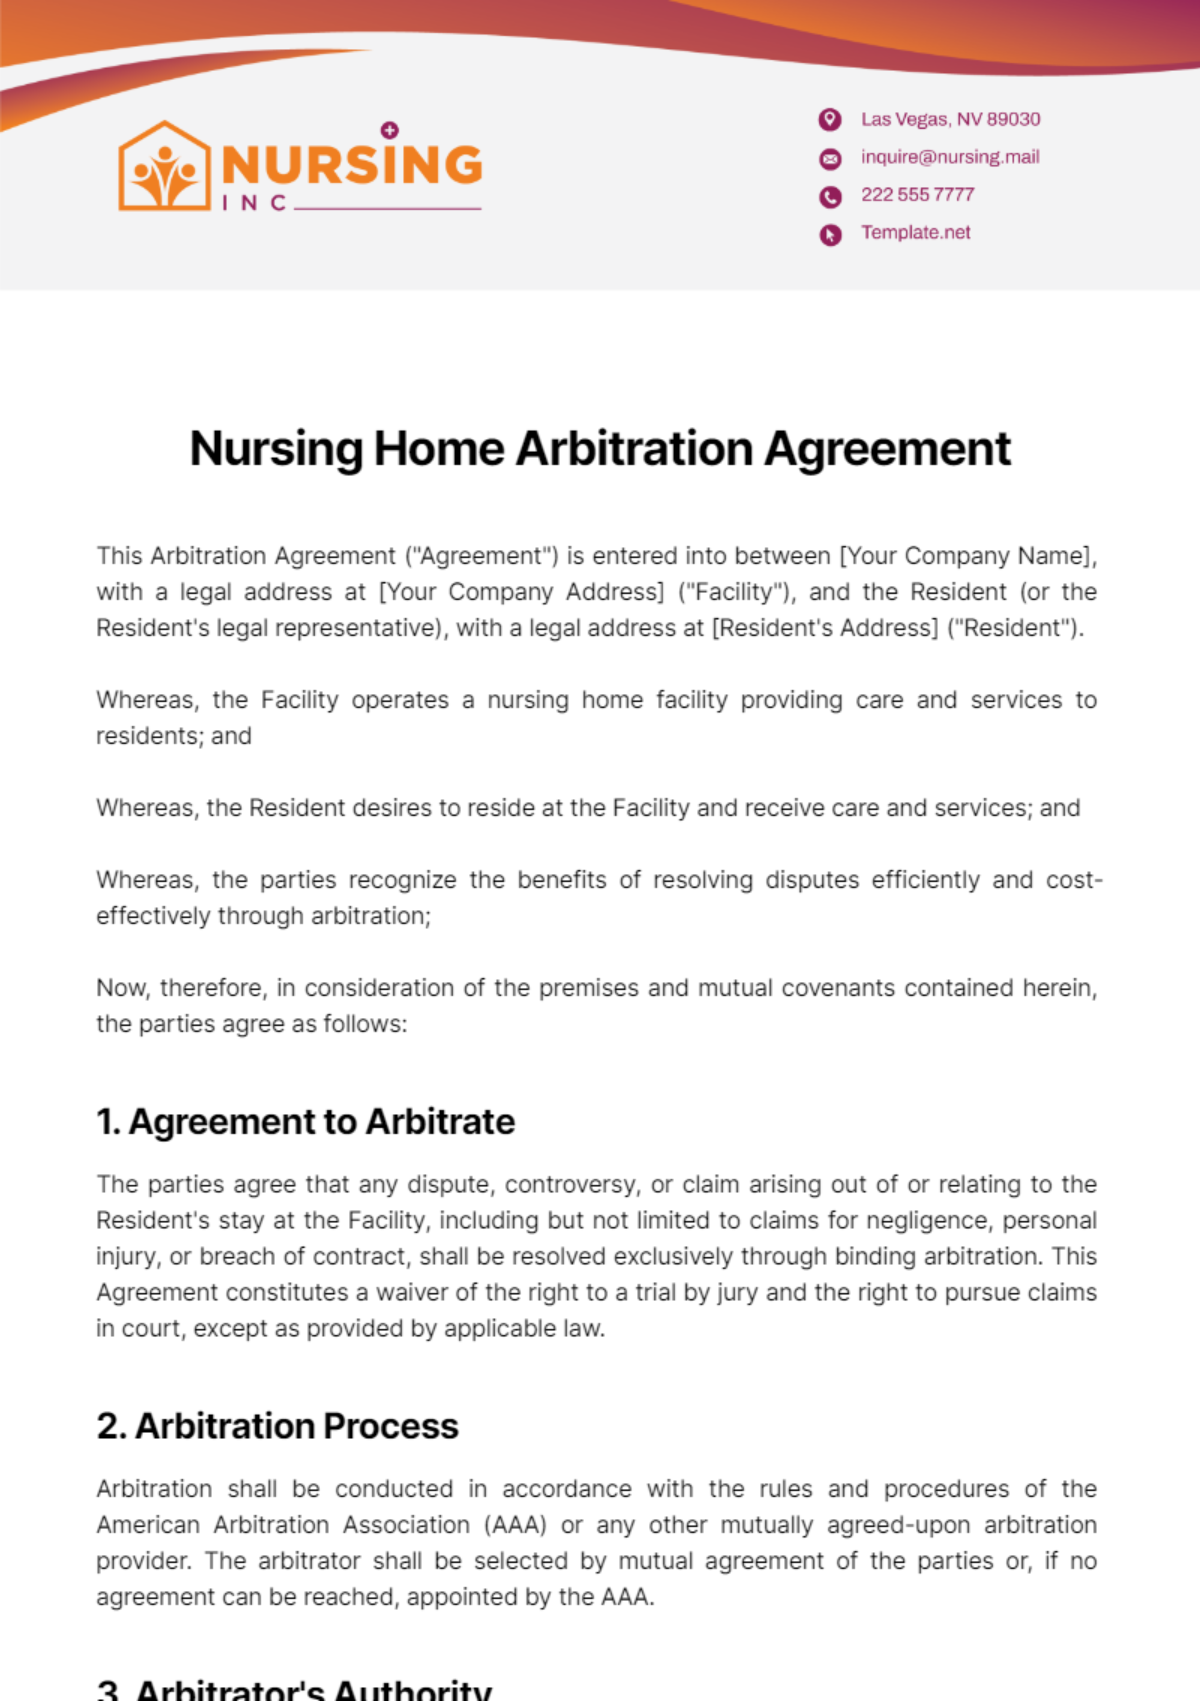 Nursing Home Arbitration Agreement Template